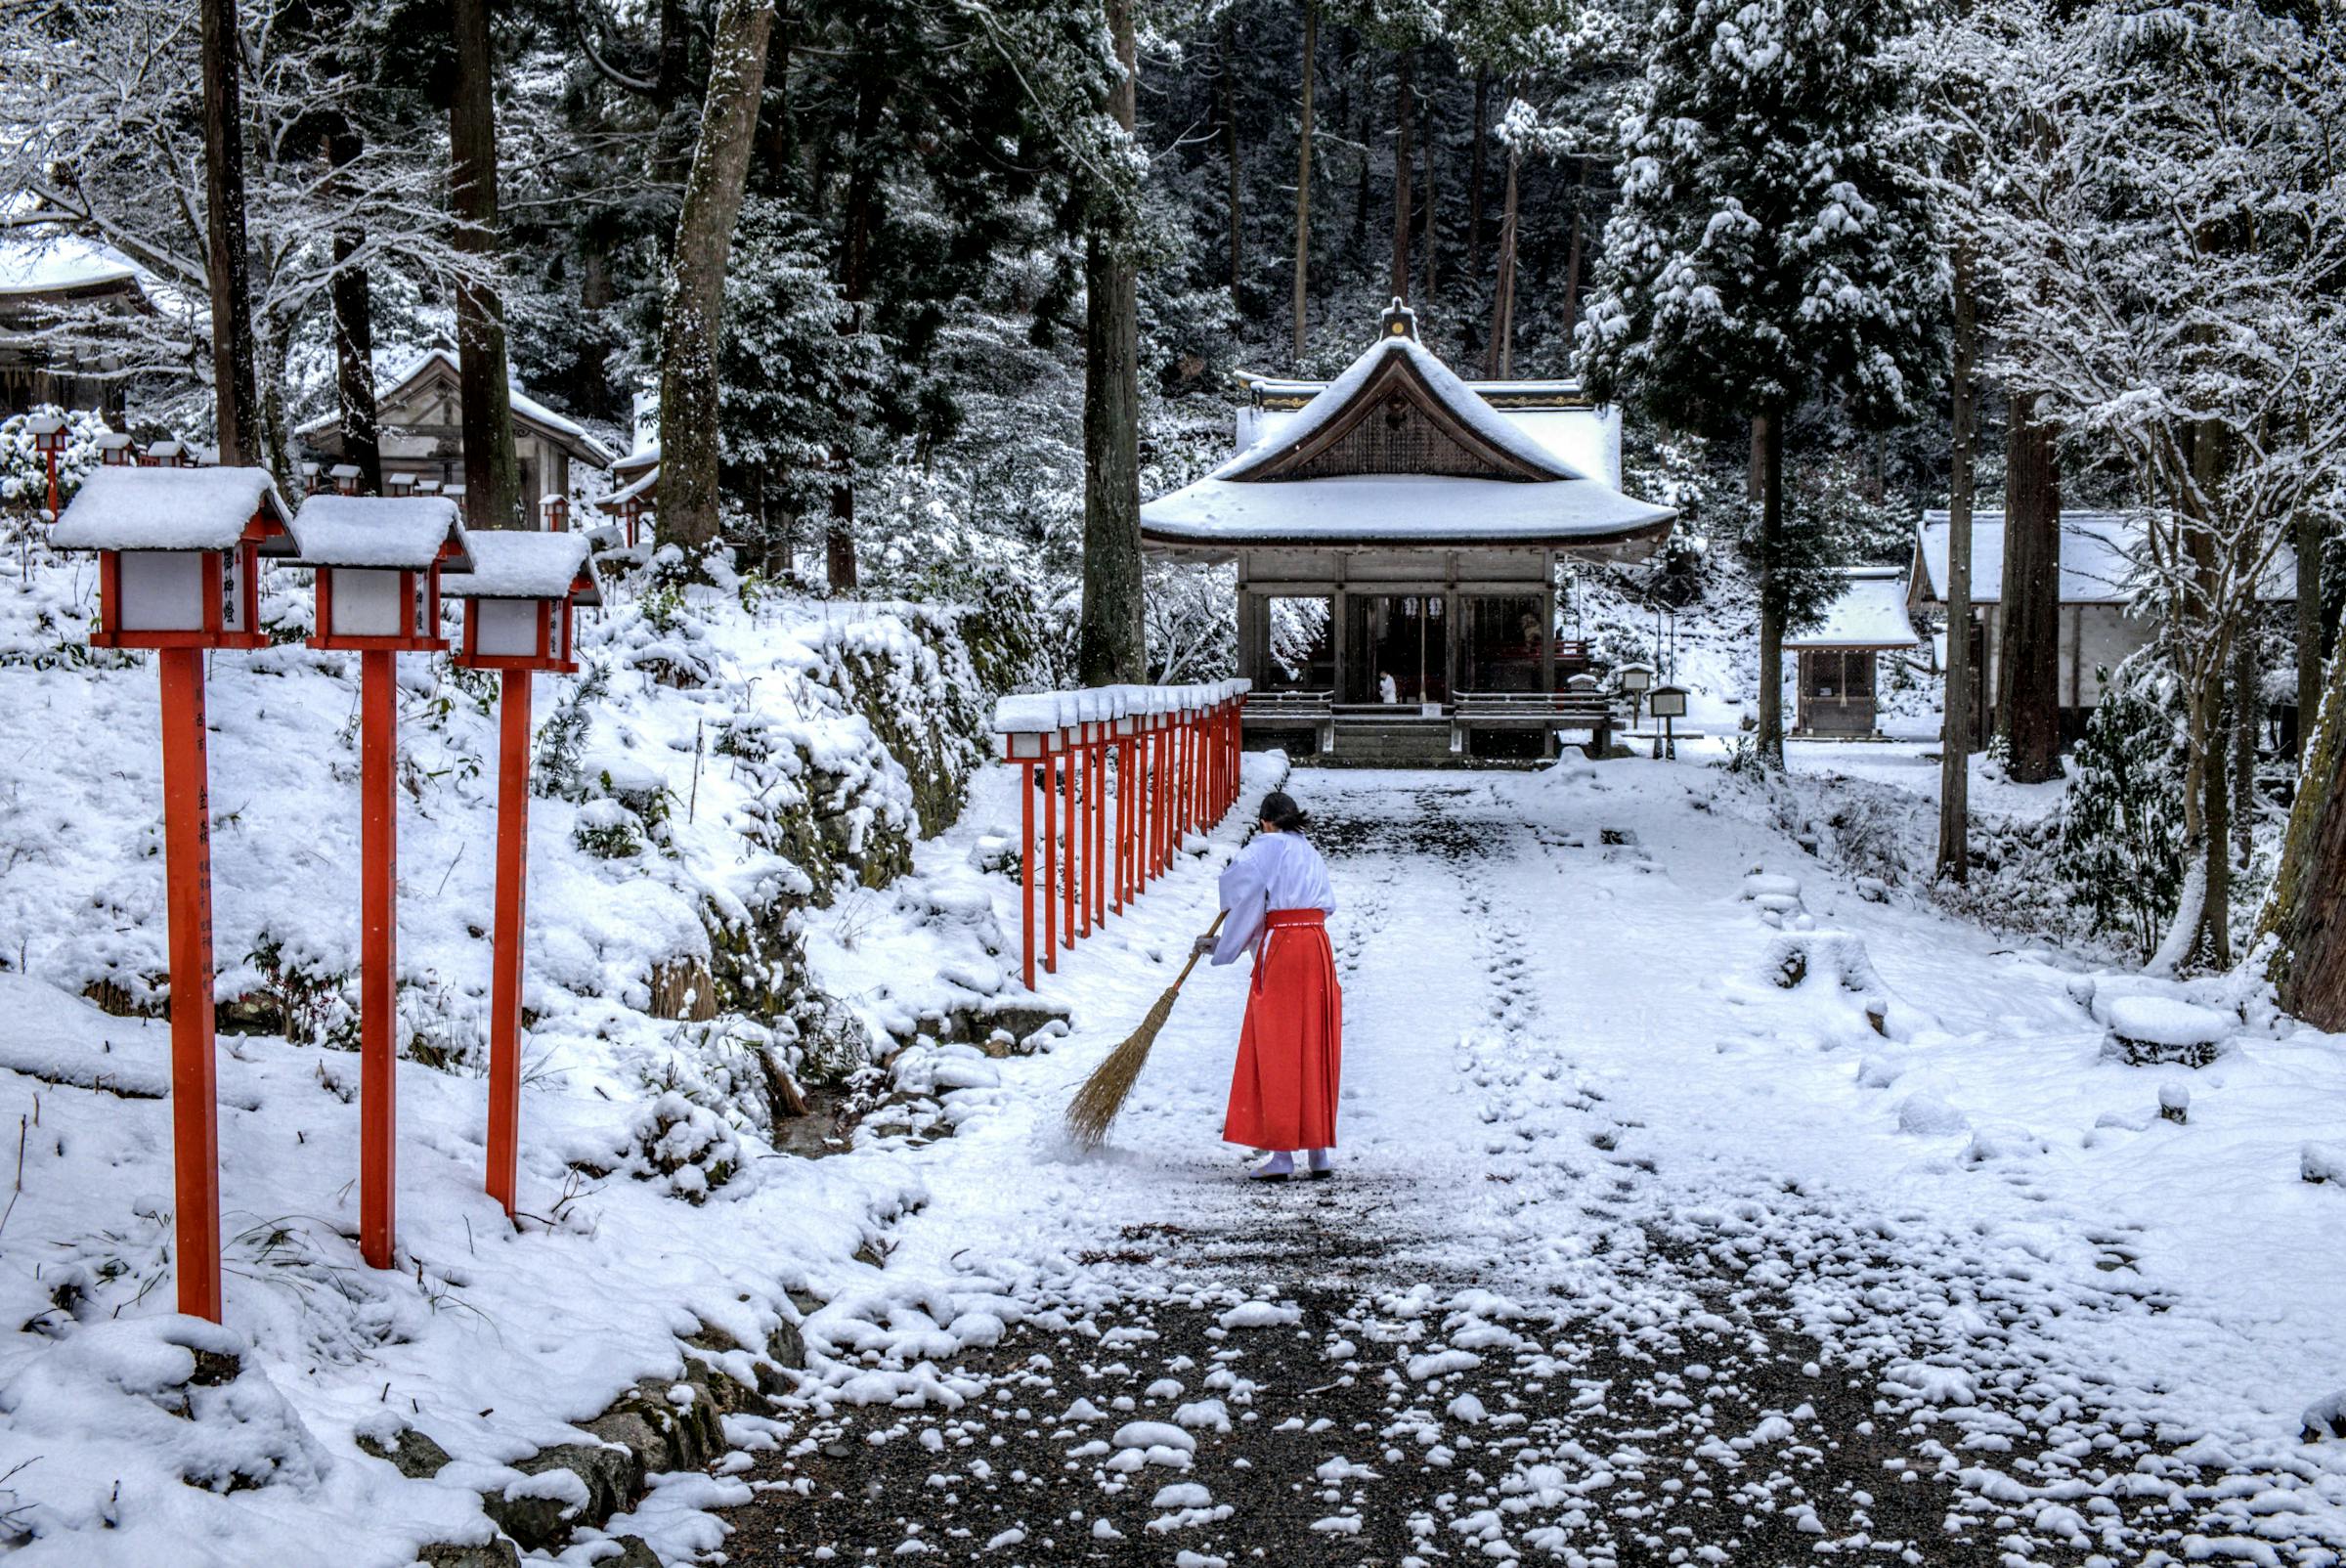 Cleaning fresh snowfall from Hiyoshi Taisha Shrine on Mount Hieizan in Shiga, Japan near the mountains of Kyoto